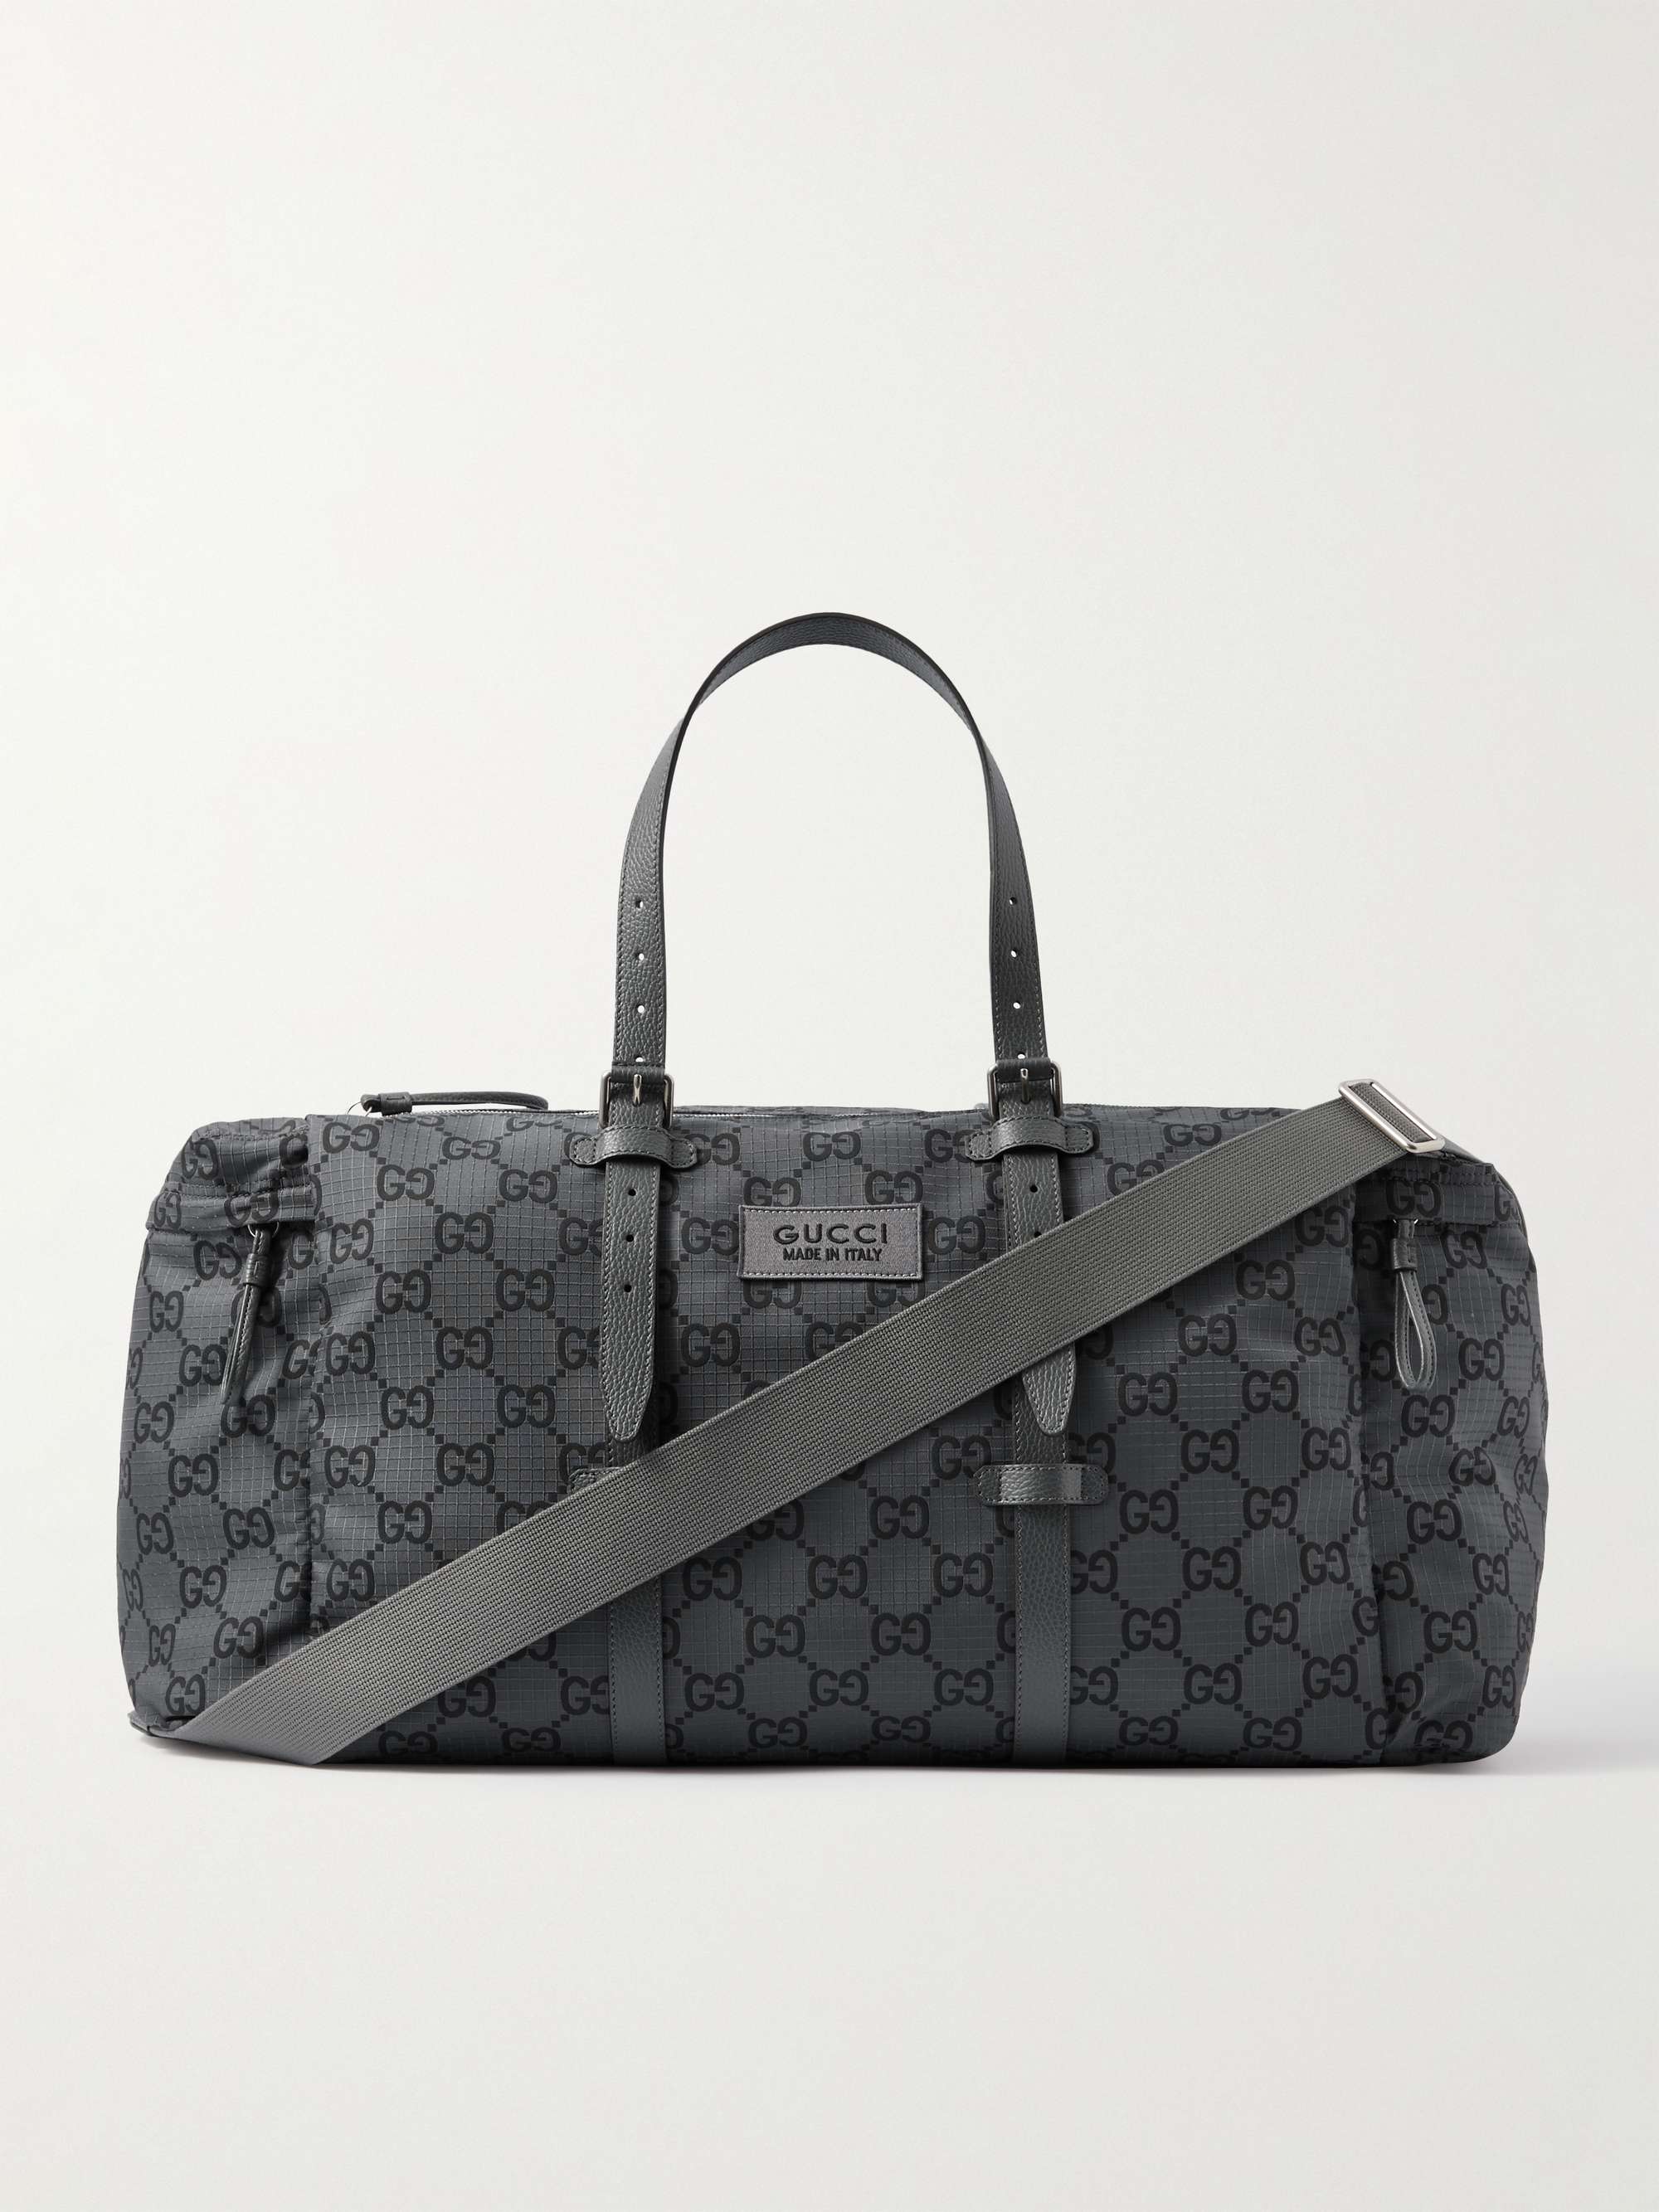 Rare Genuine Gucci x Balenciaga The Hacker Project Medium Duffle Bag 11H  17.1W | eBay